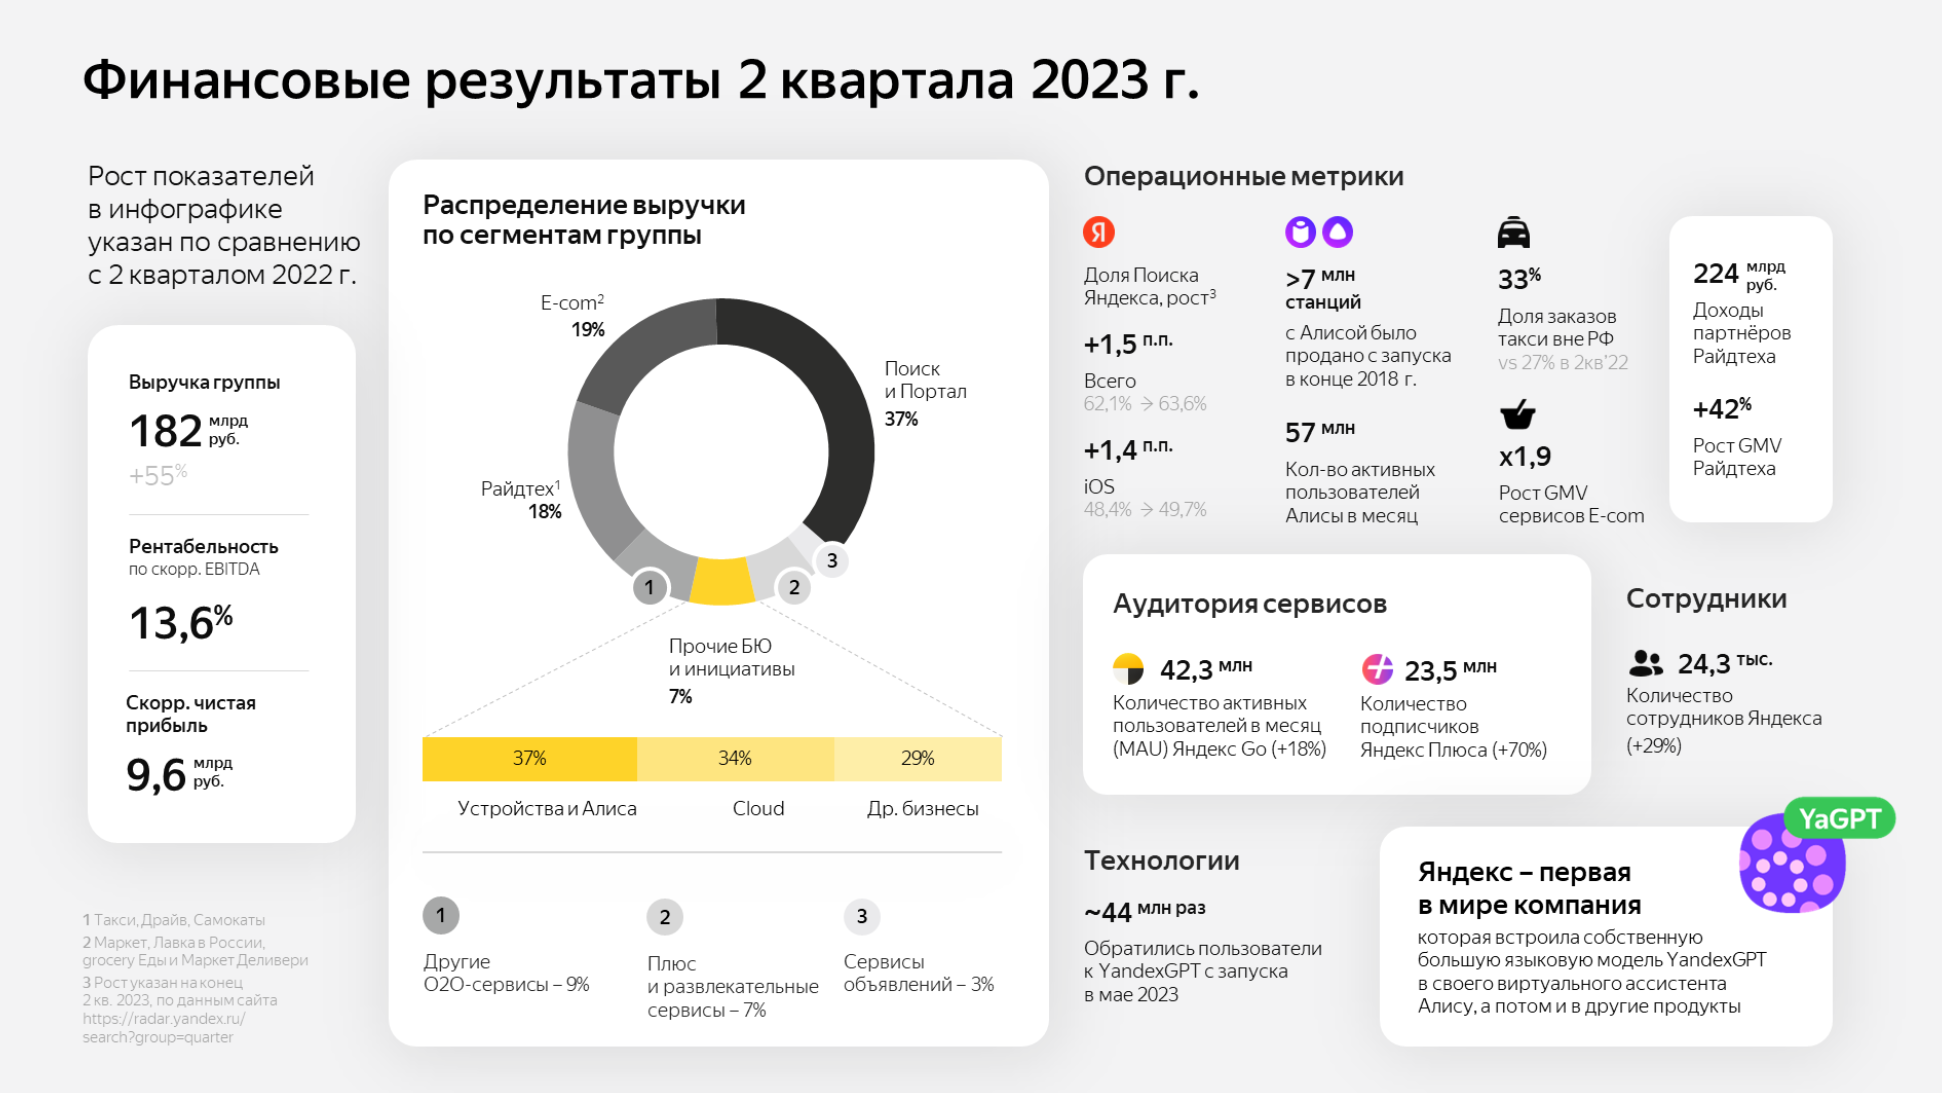 Прибыль Яндекса 2022. 2 Квартал 2023 года.